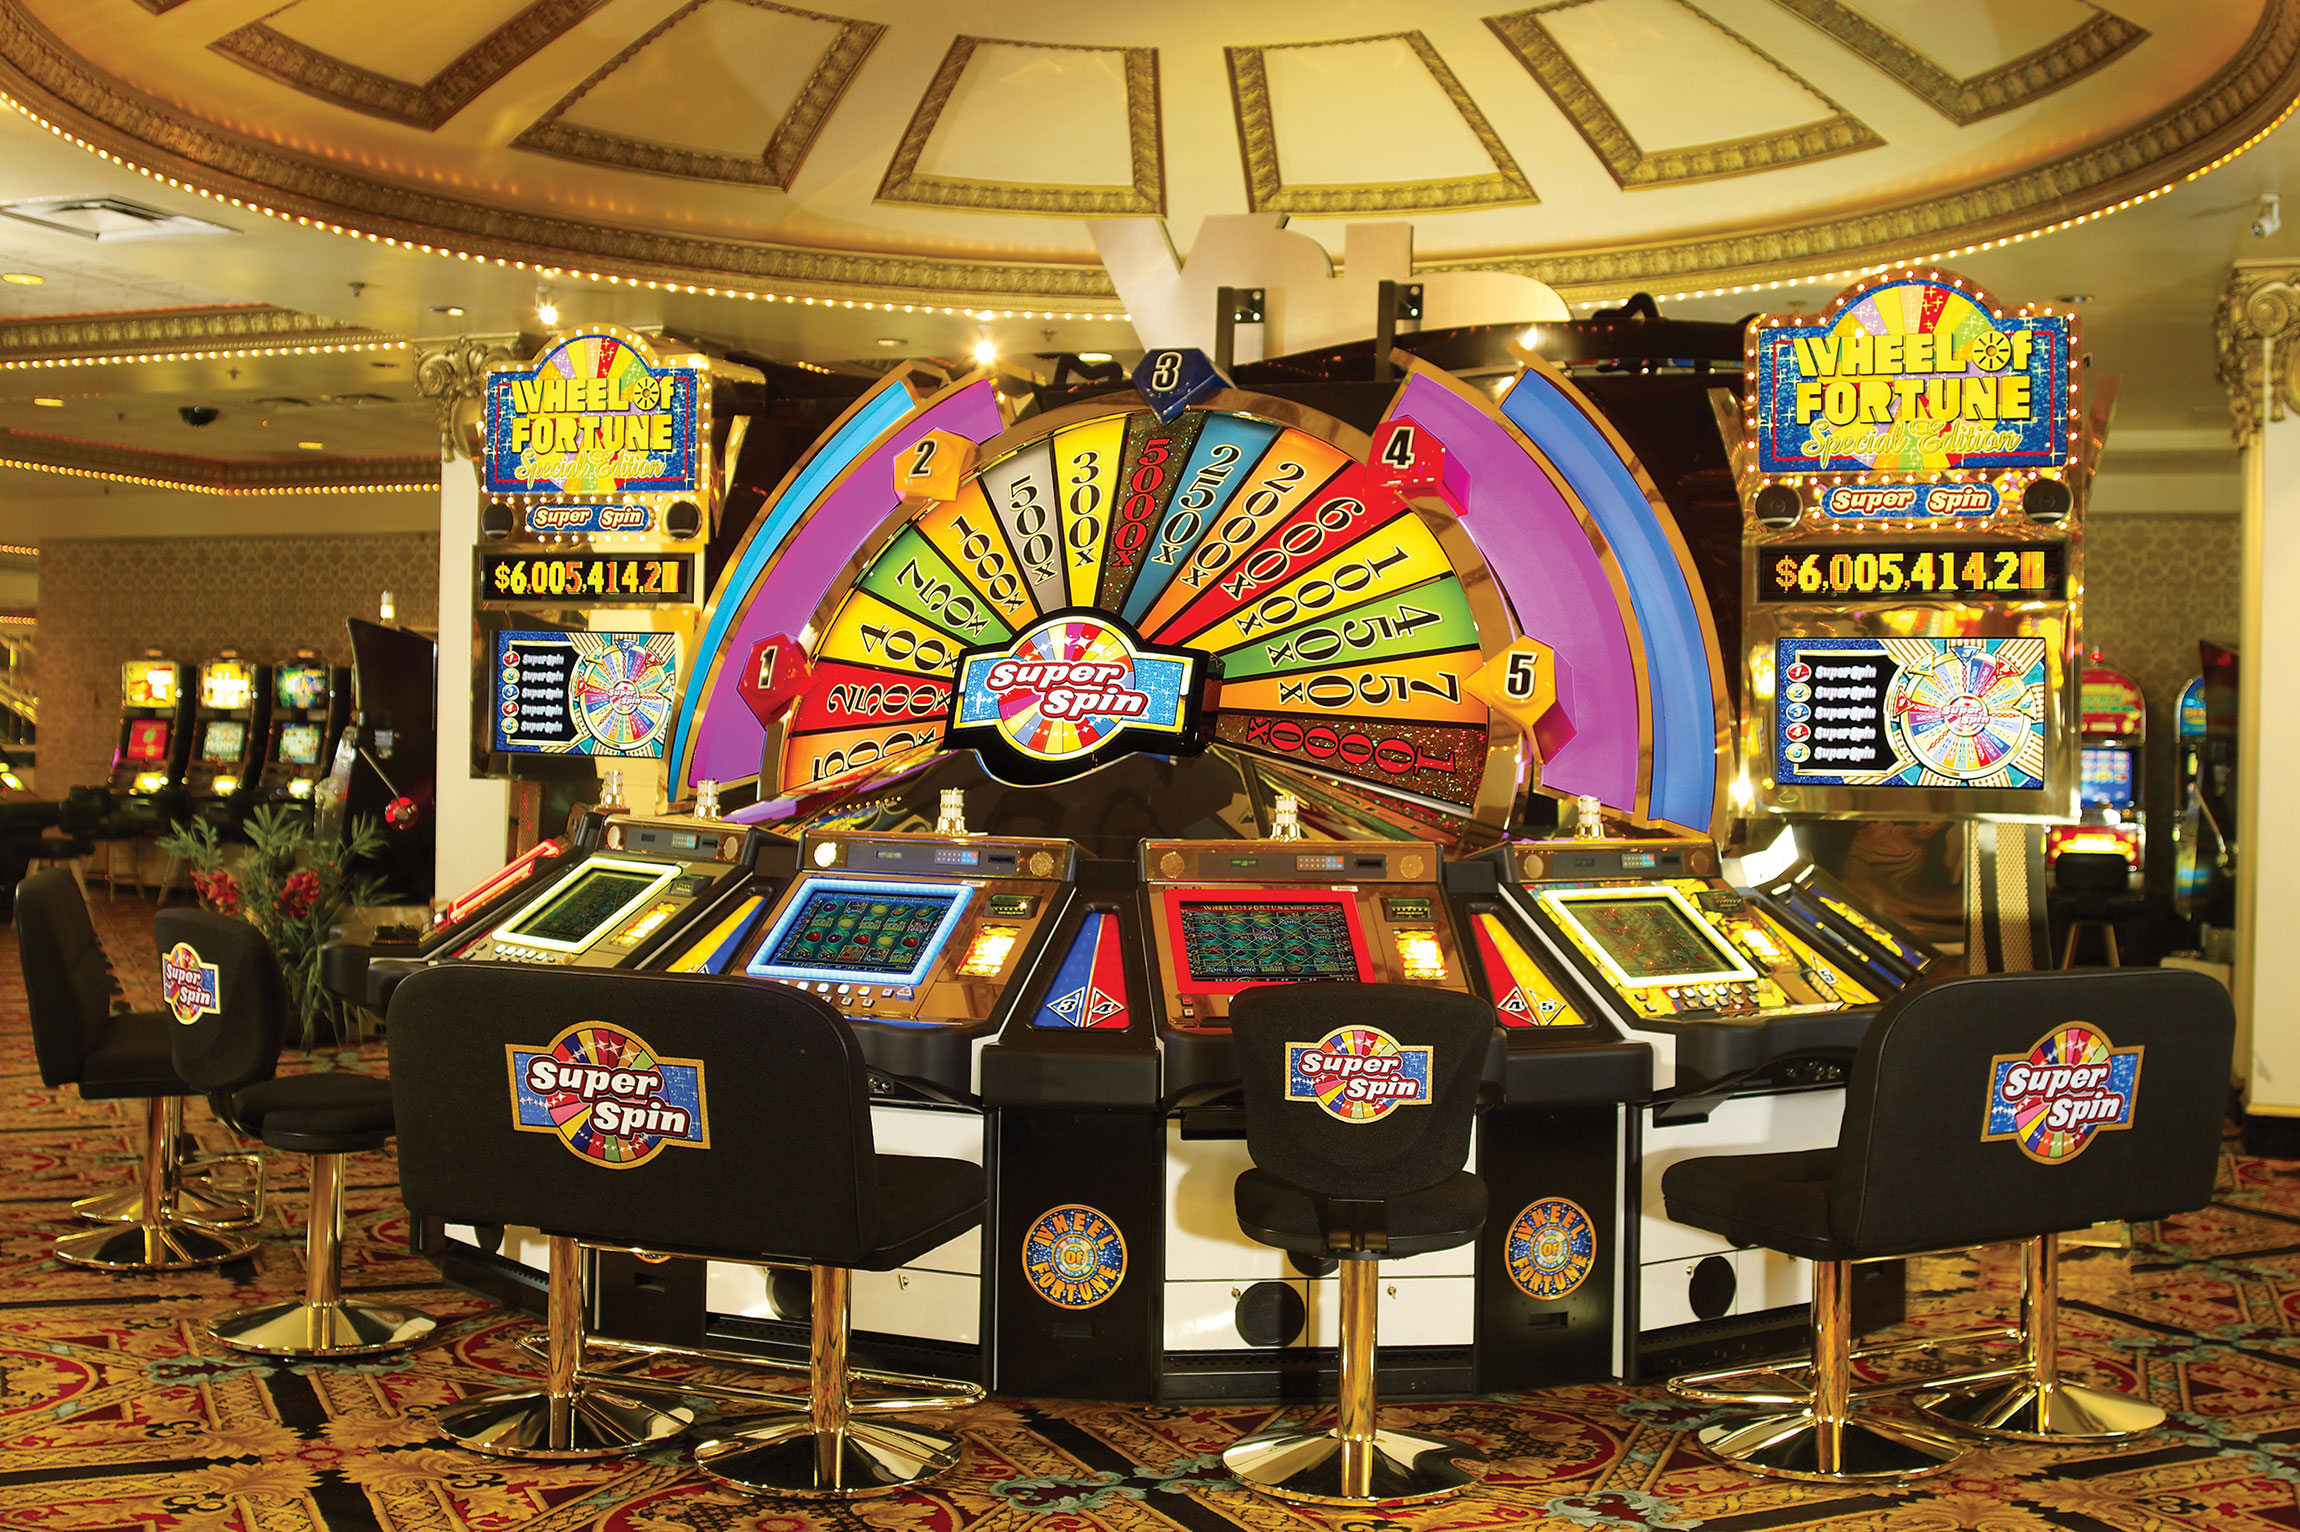 Fortune casino slots samsung hd tv 28